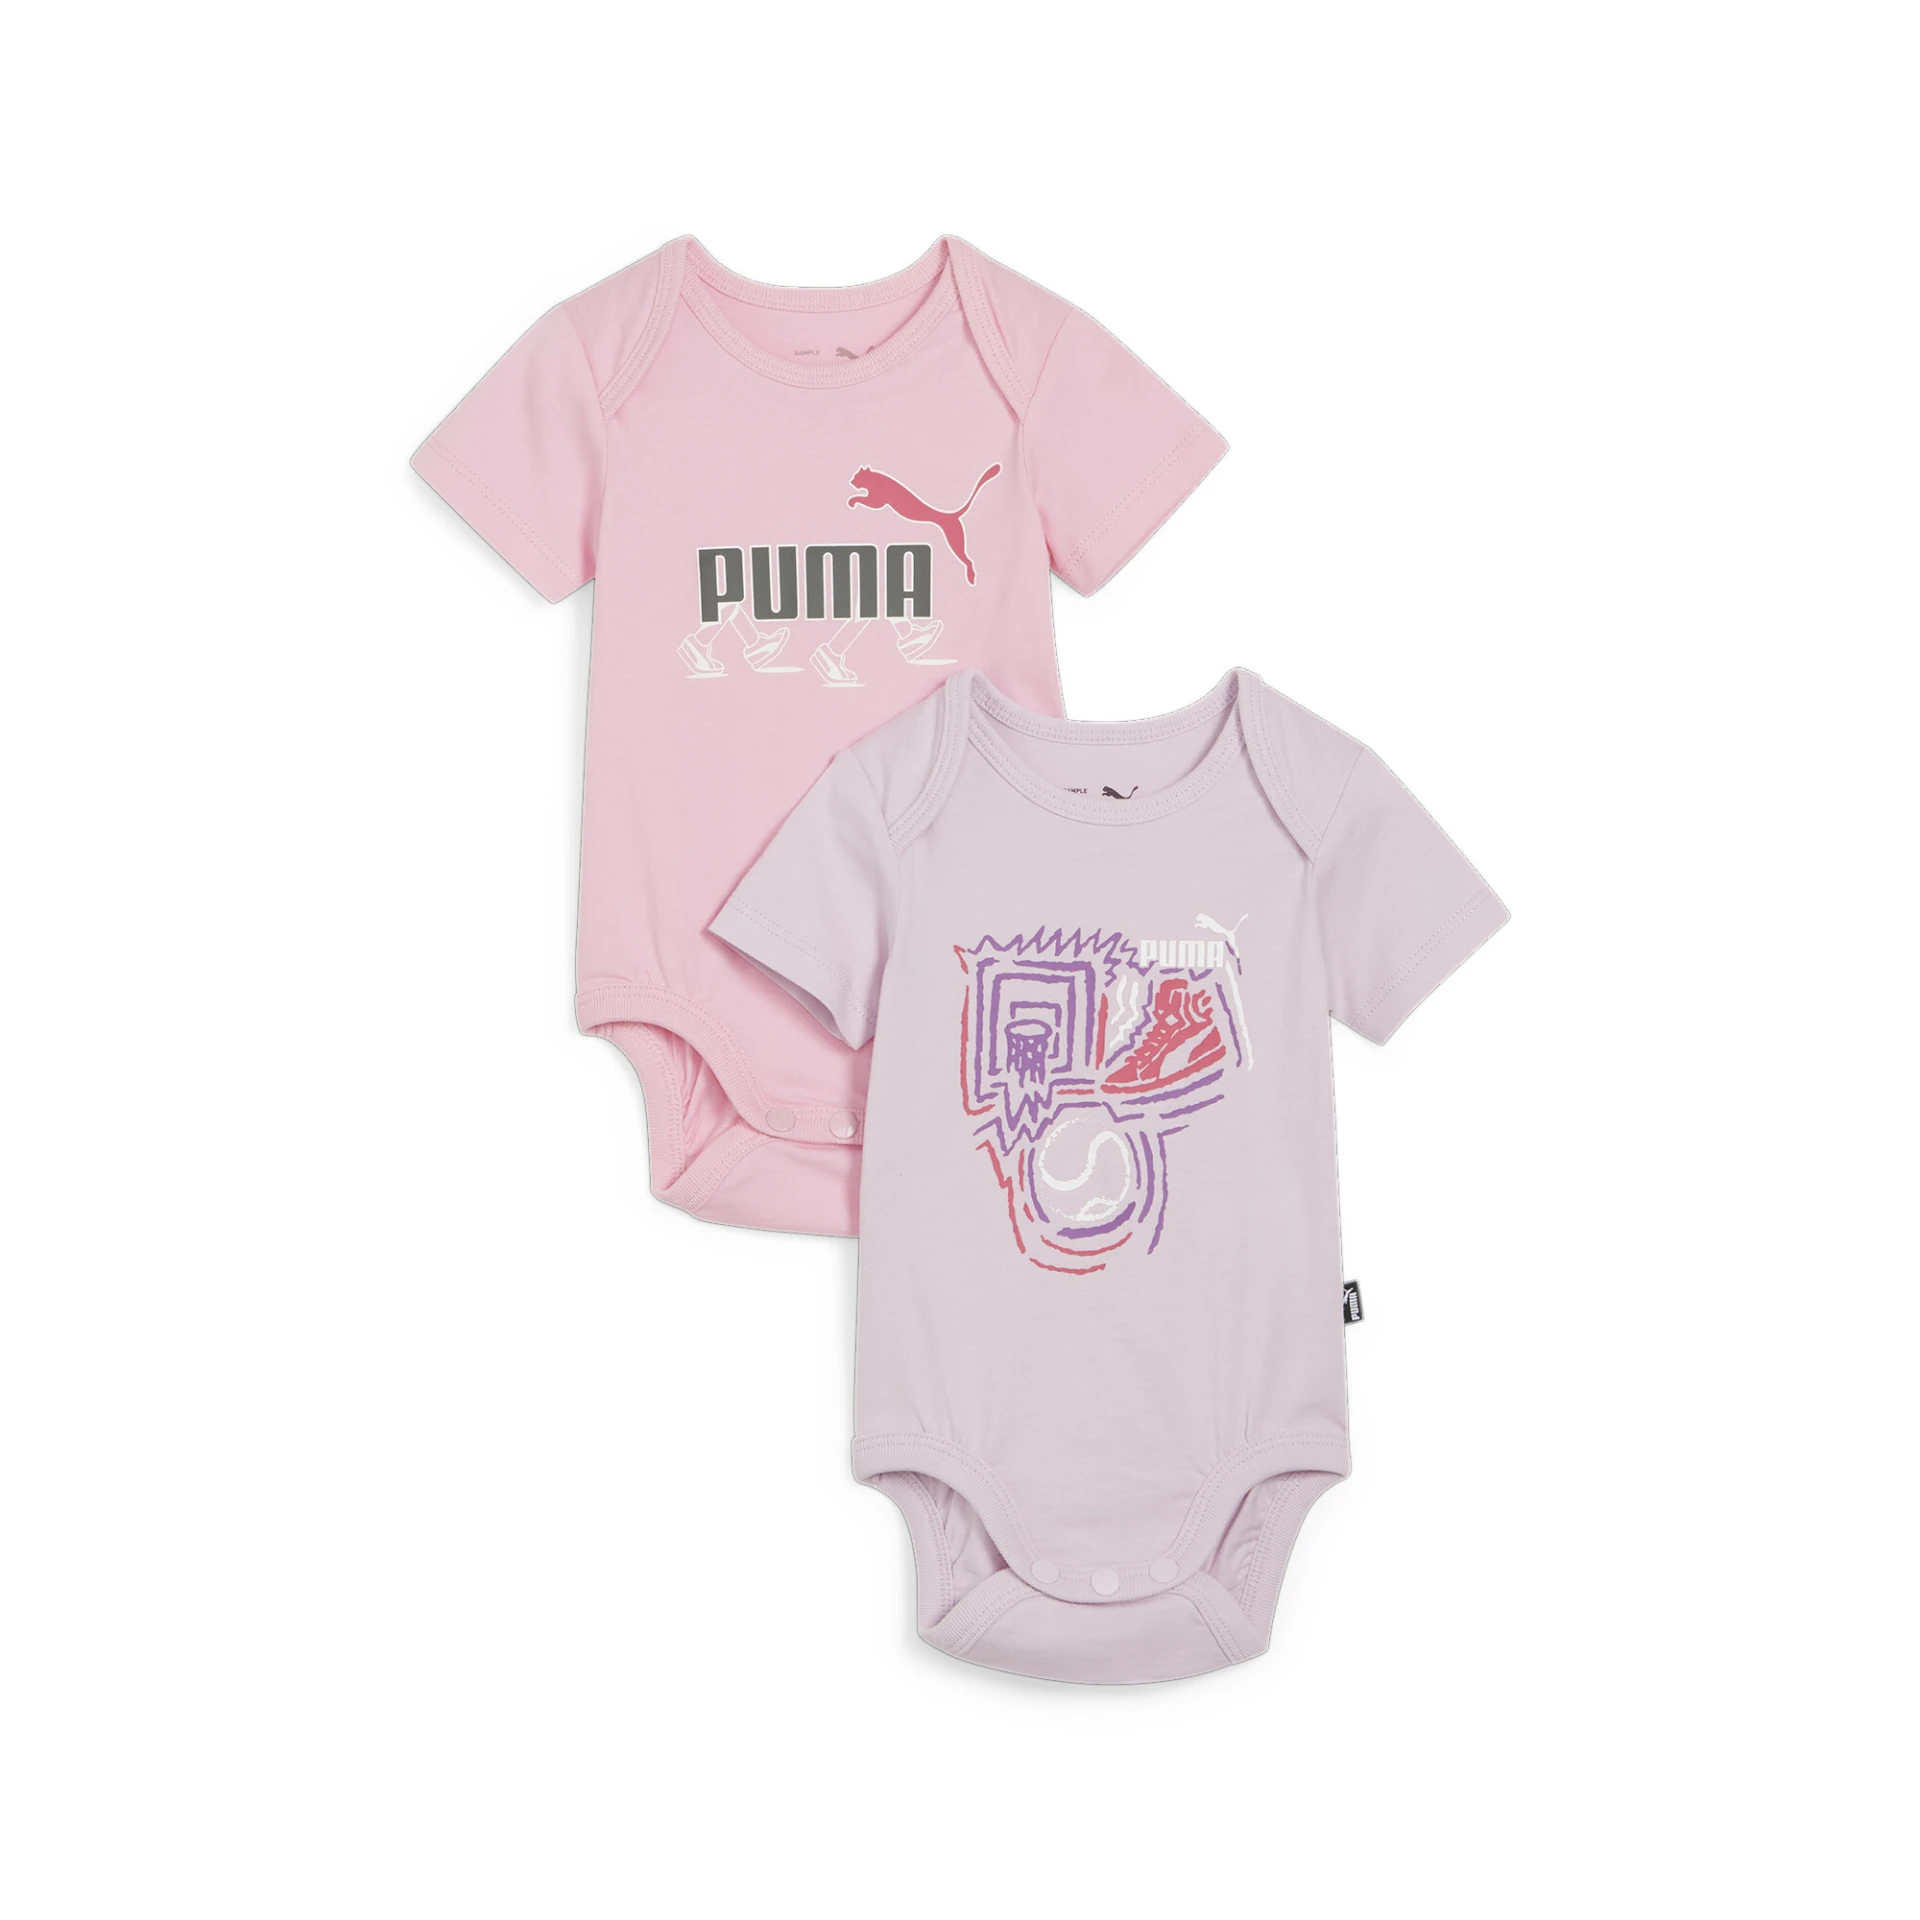 PUMA MINICATS_Newborn_Bodysuit_2pcs_Set 680598 060 GRAPE MIST